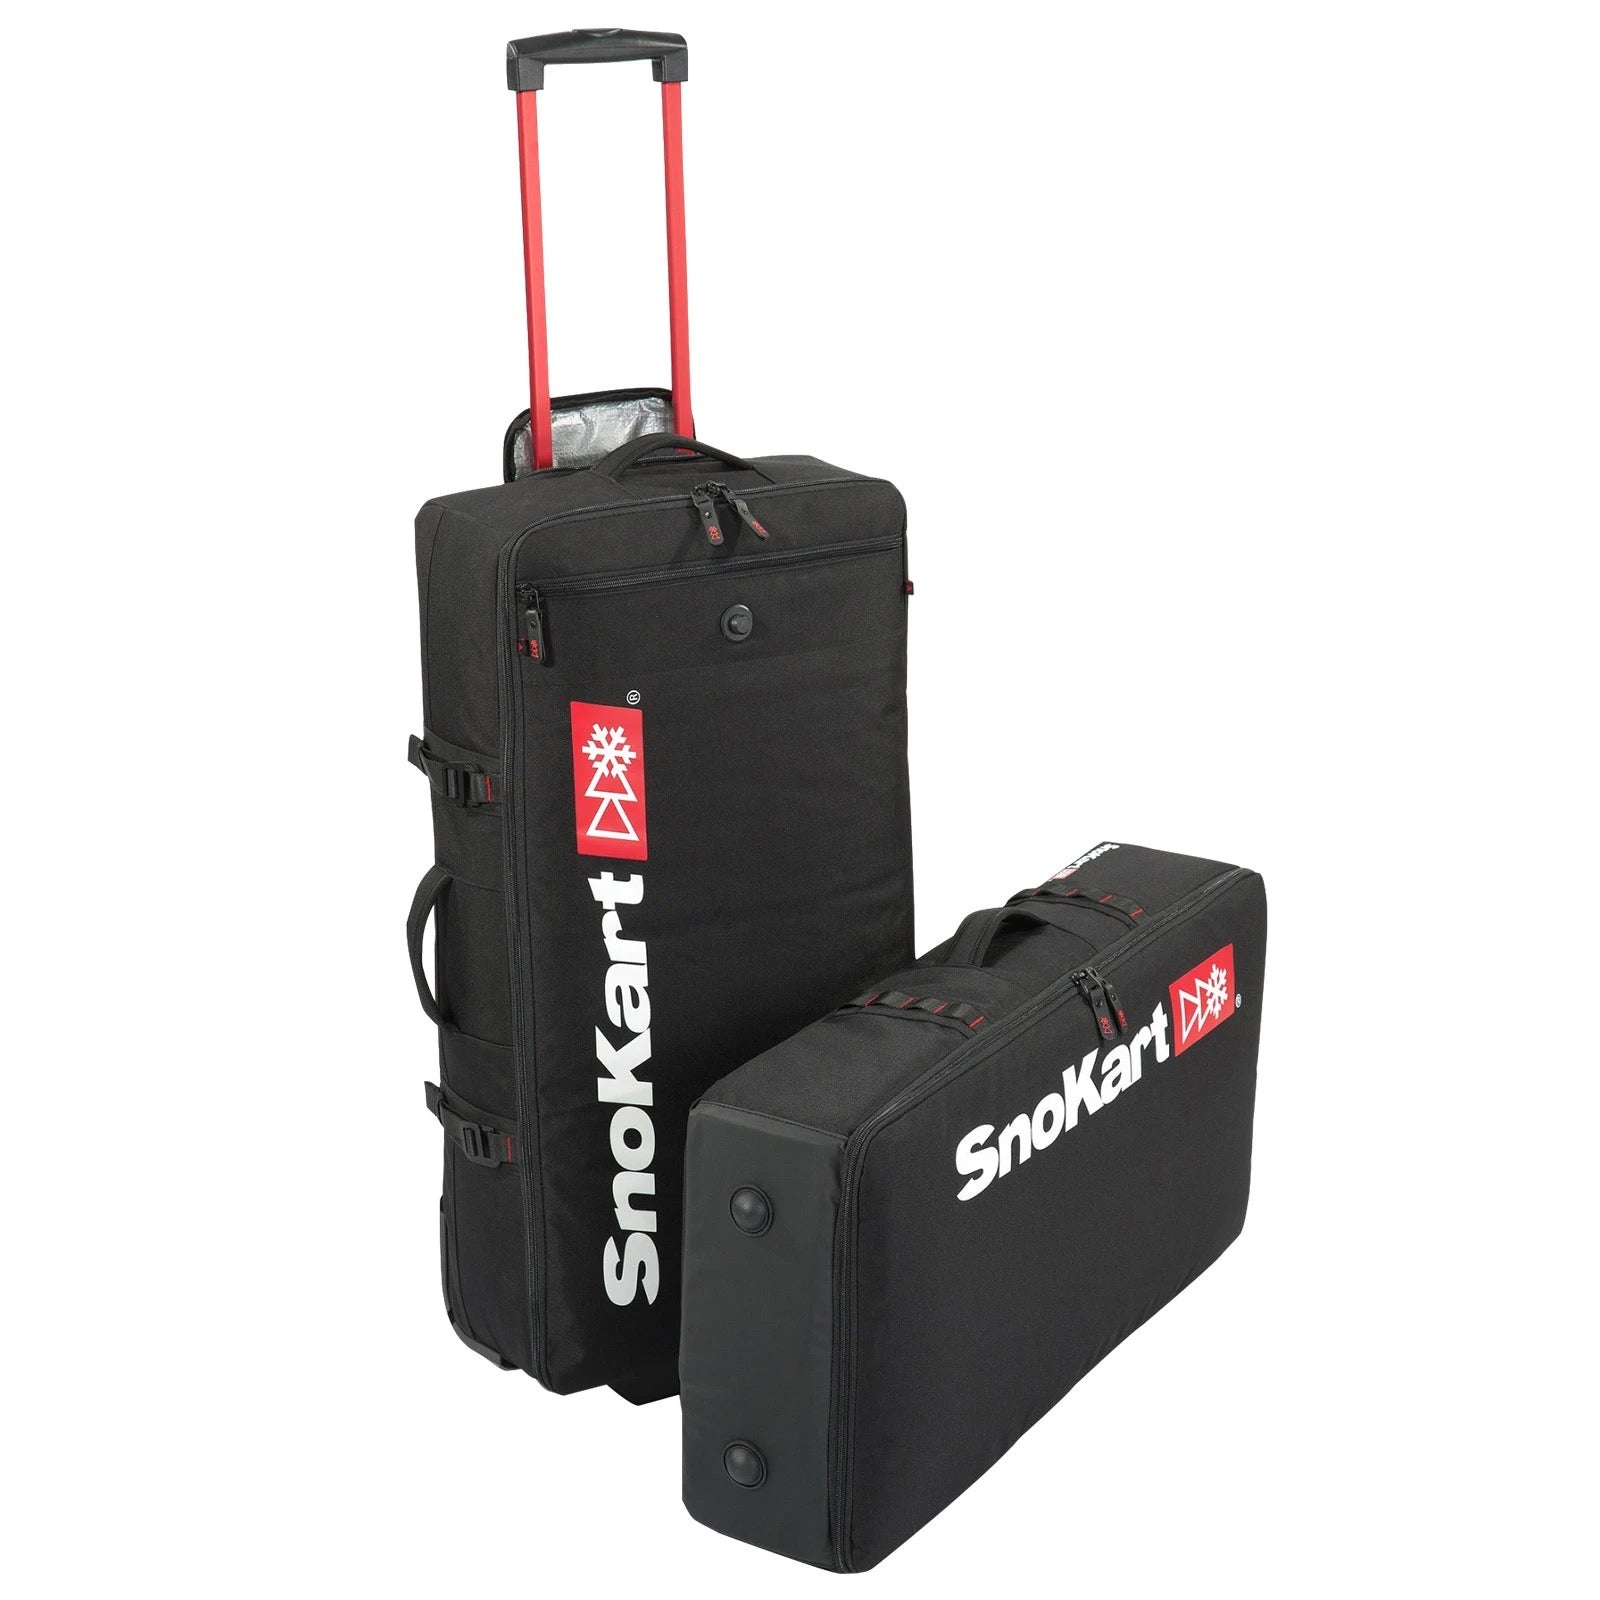 Snokart Kart 6 Luggage System